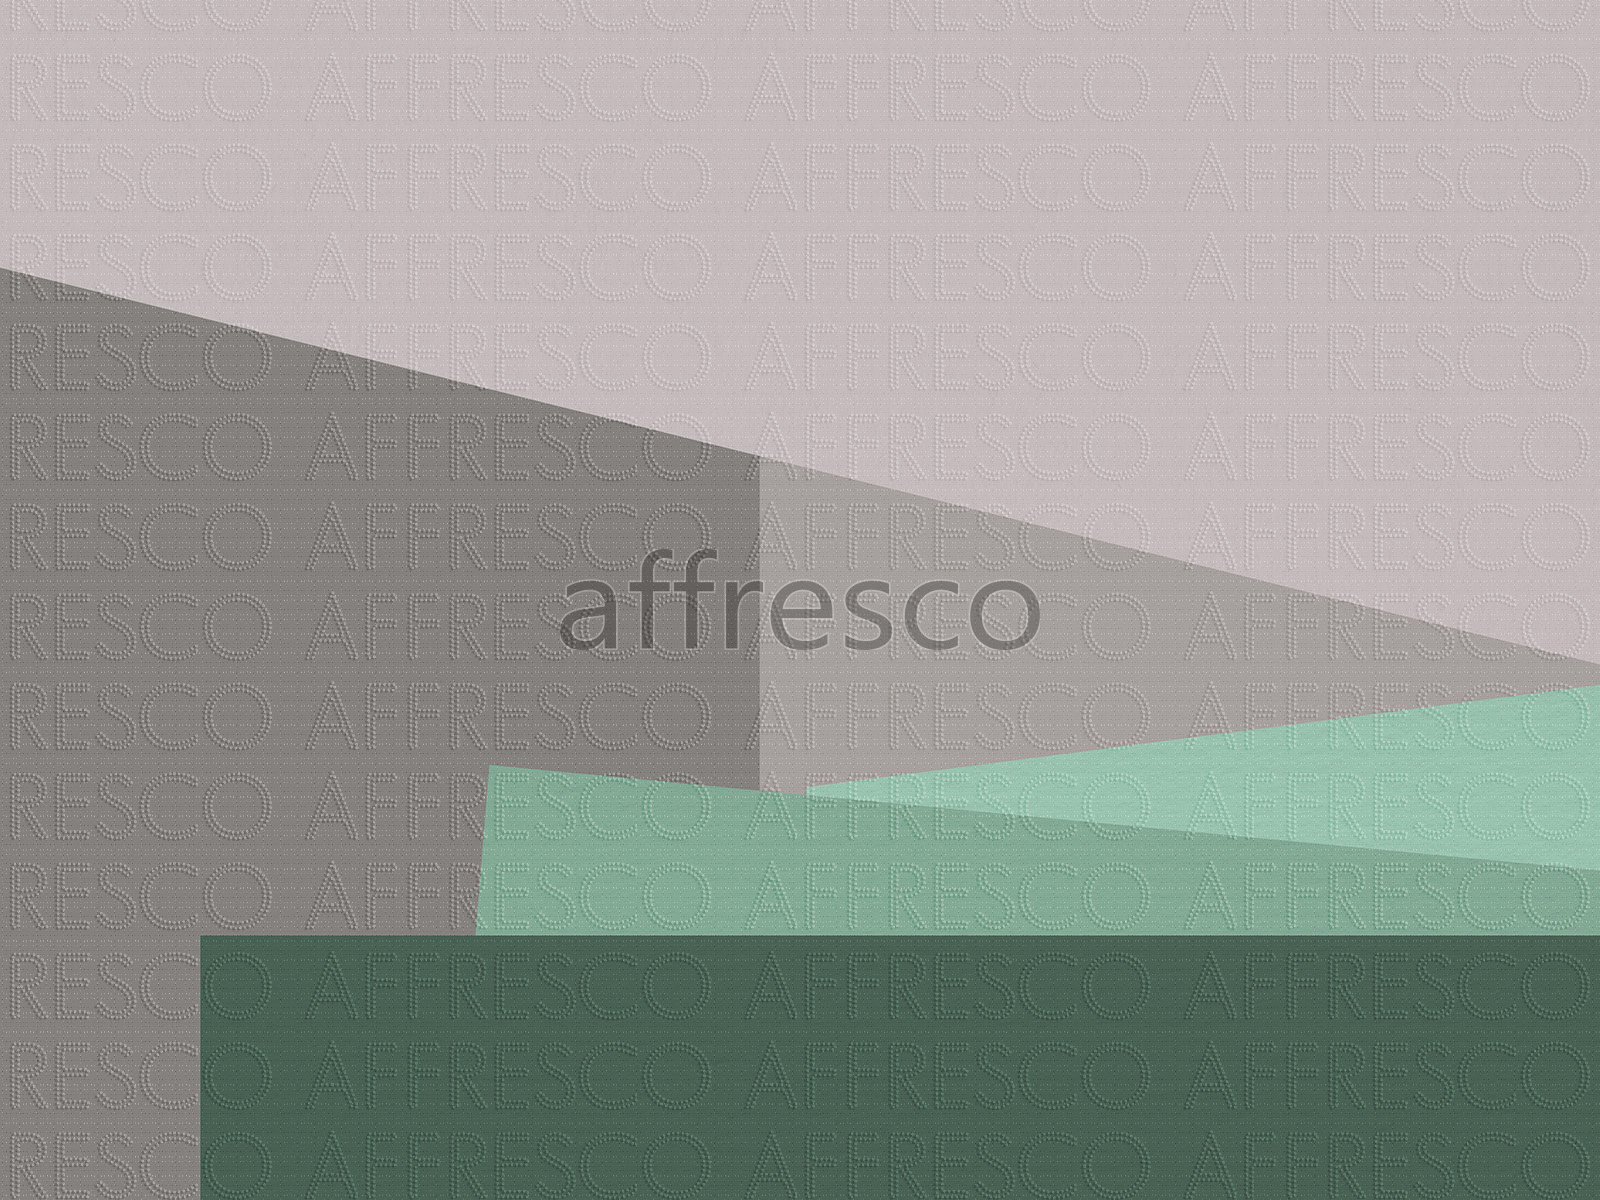 RE837-COL4 | Fine Art | Affresco Factory